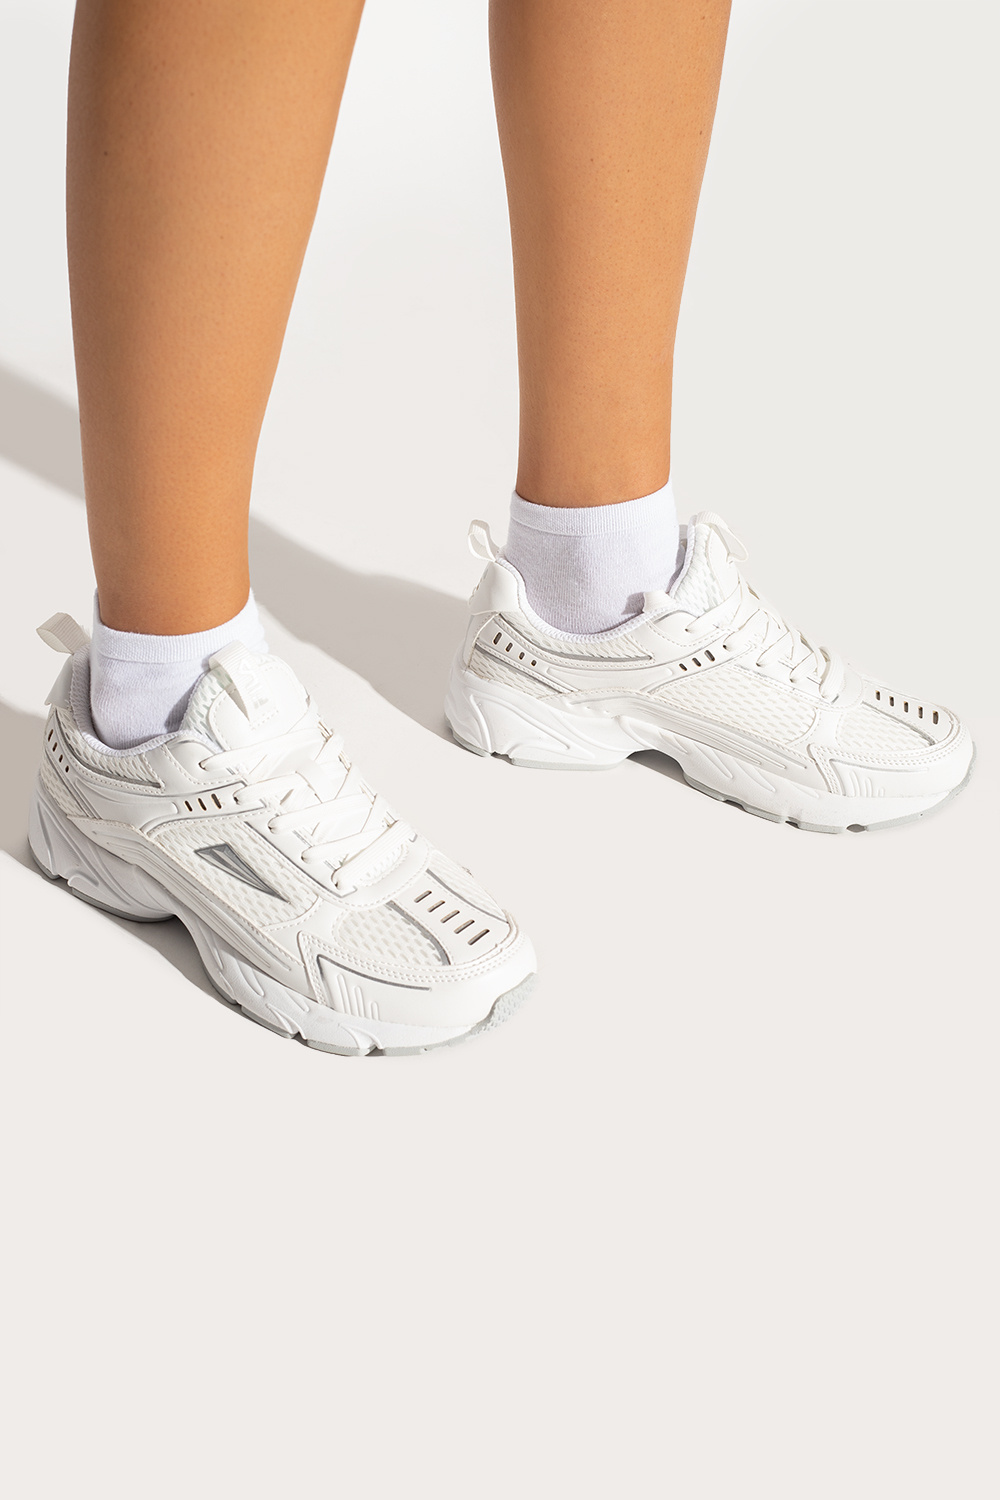 Fila ‘2000 Stunner Low’ sneakers